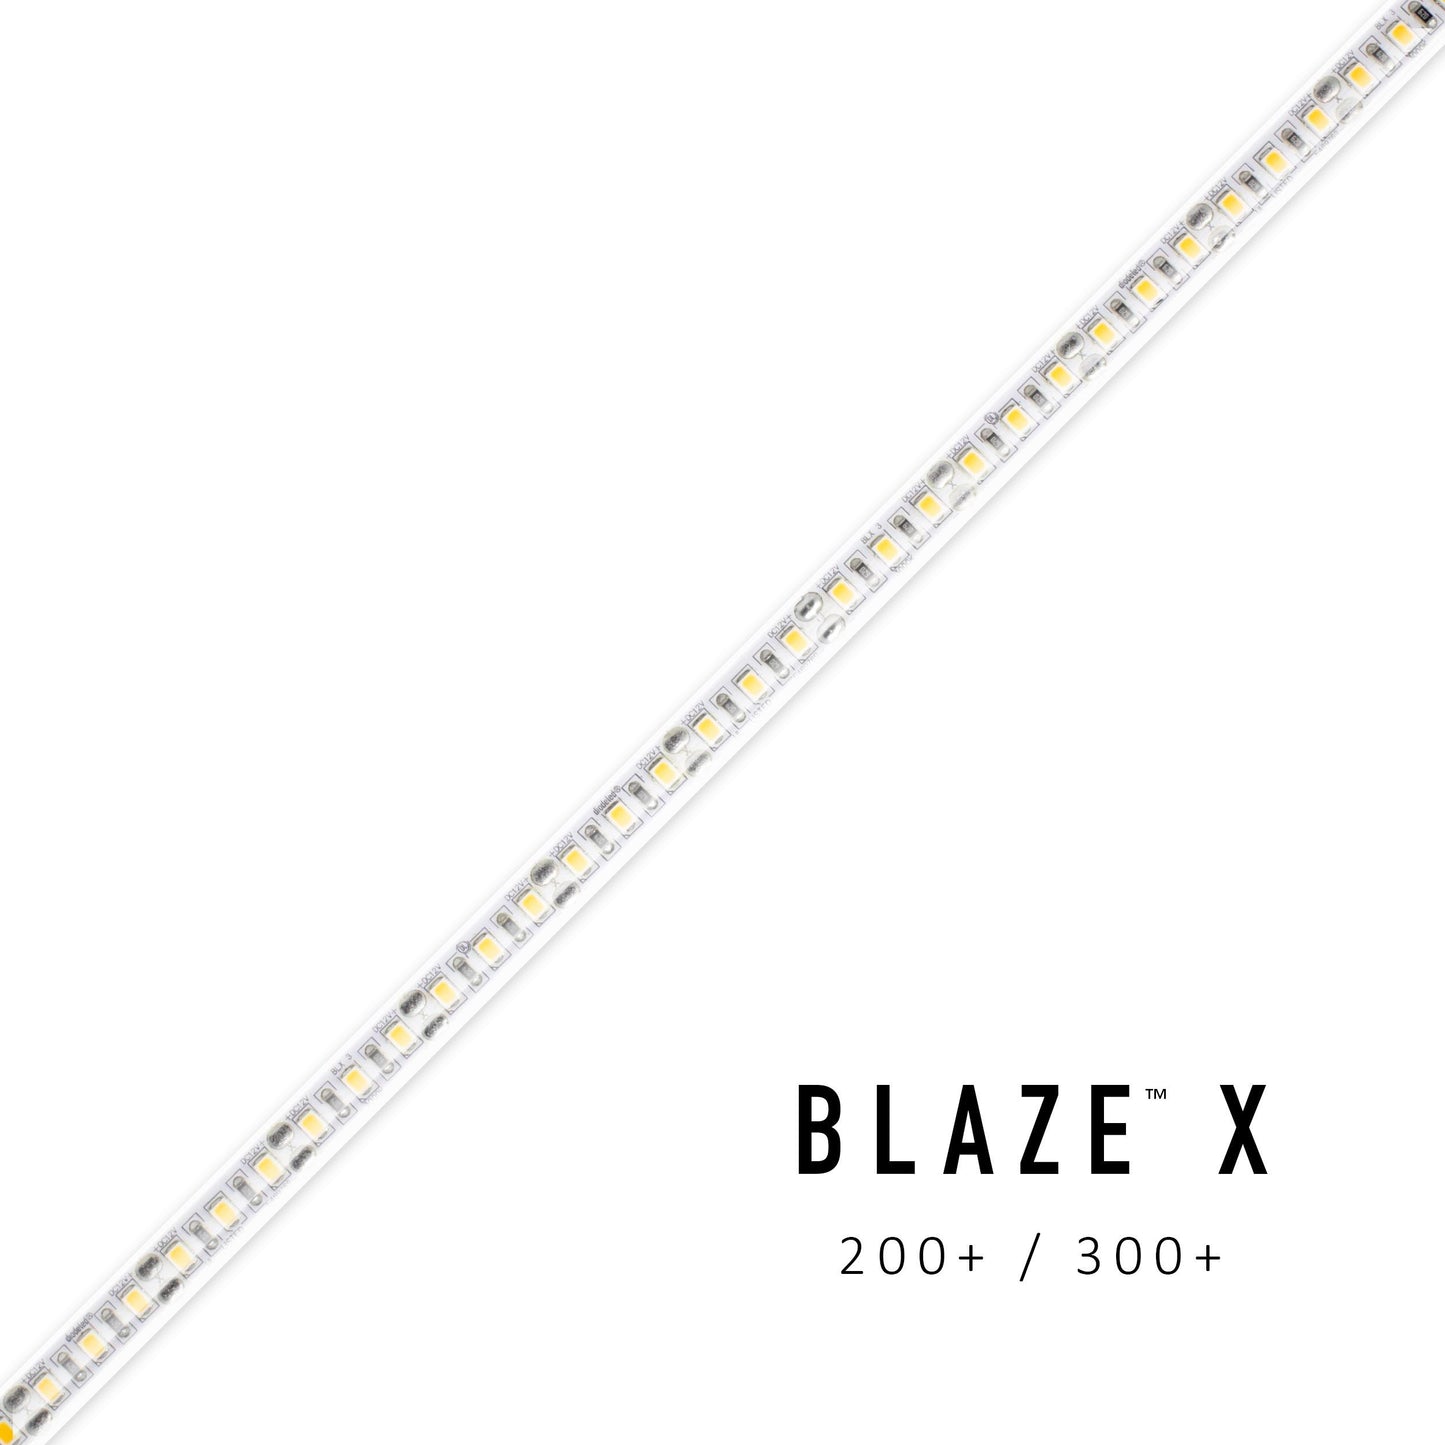 Diode LED DI-12V-BLX2-24-W016 16.4ft Spool Blaze X 200+ Lumen Per Foot Wet Location LED Tape Light 2400K 12V DC